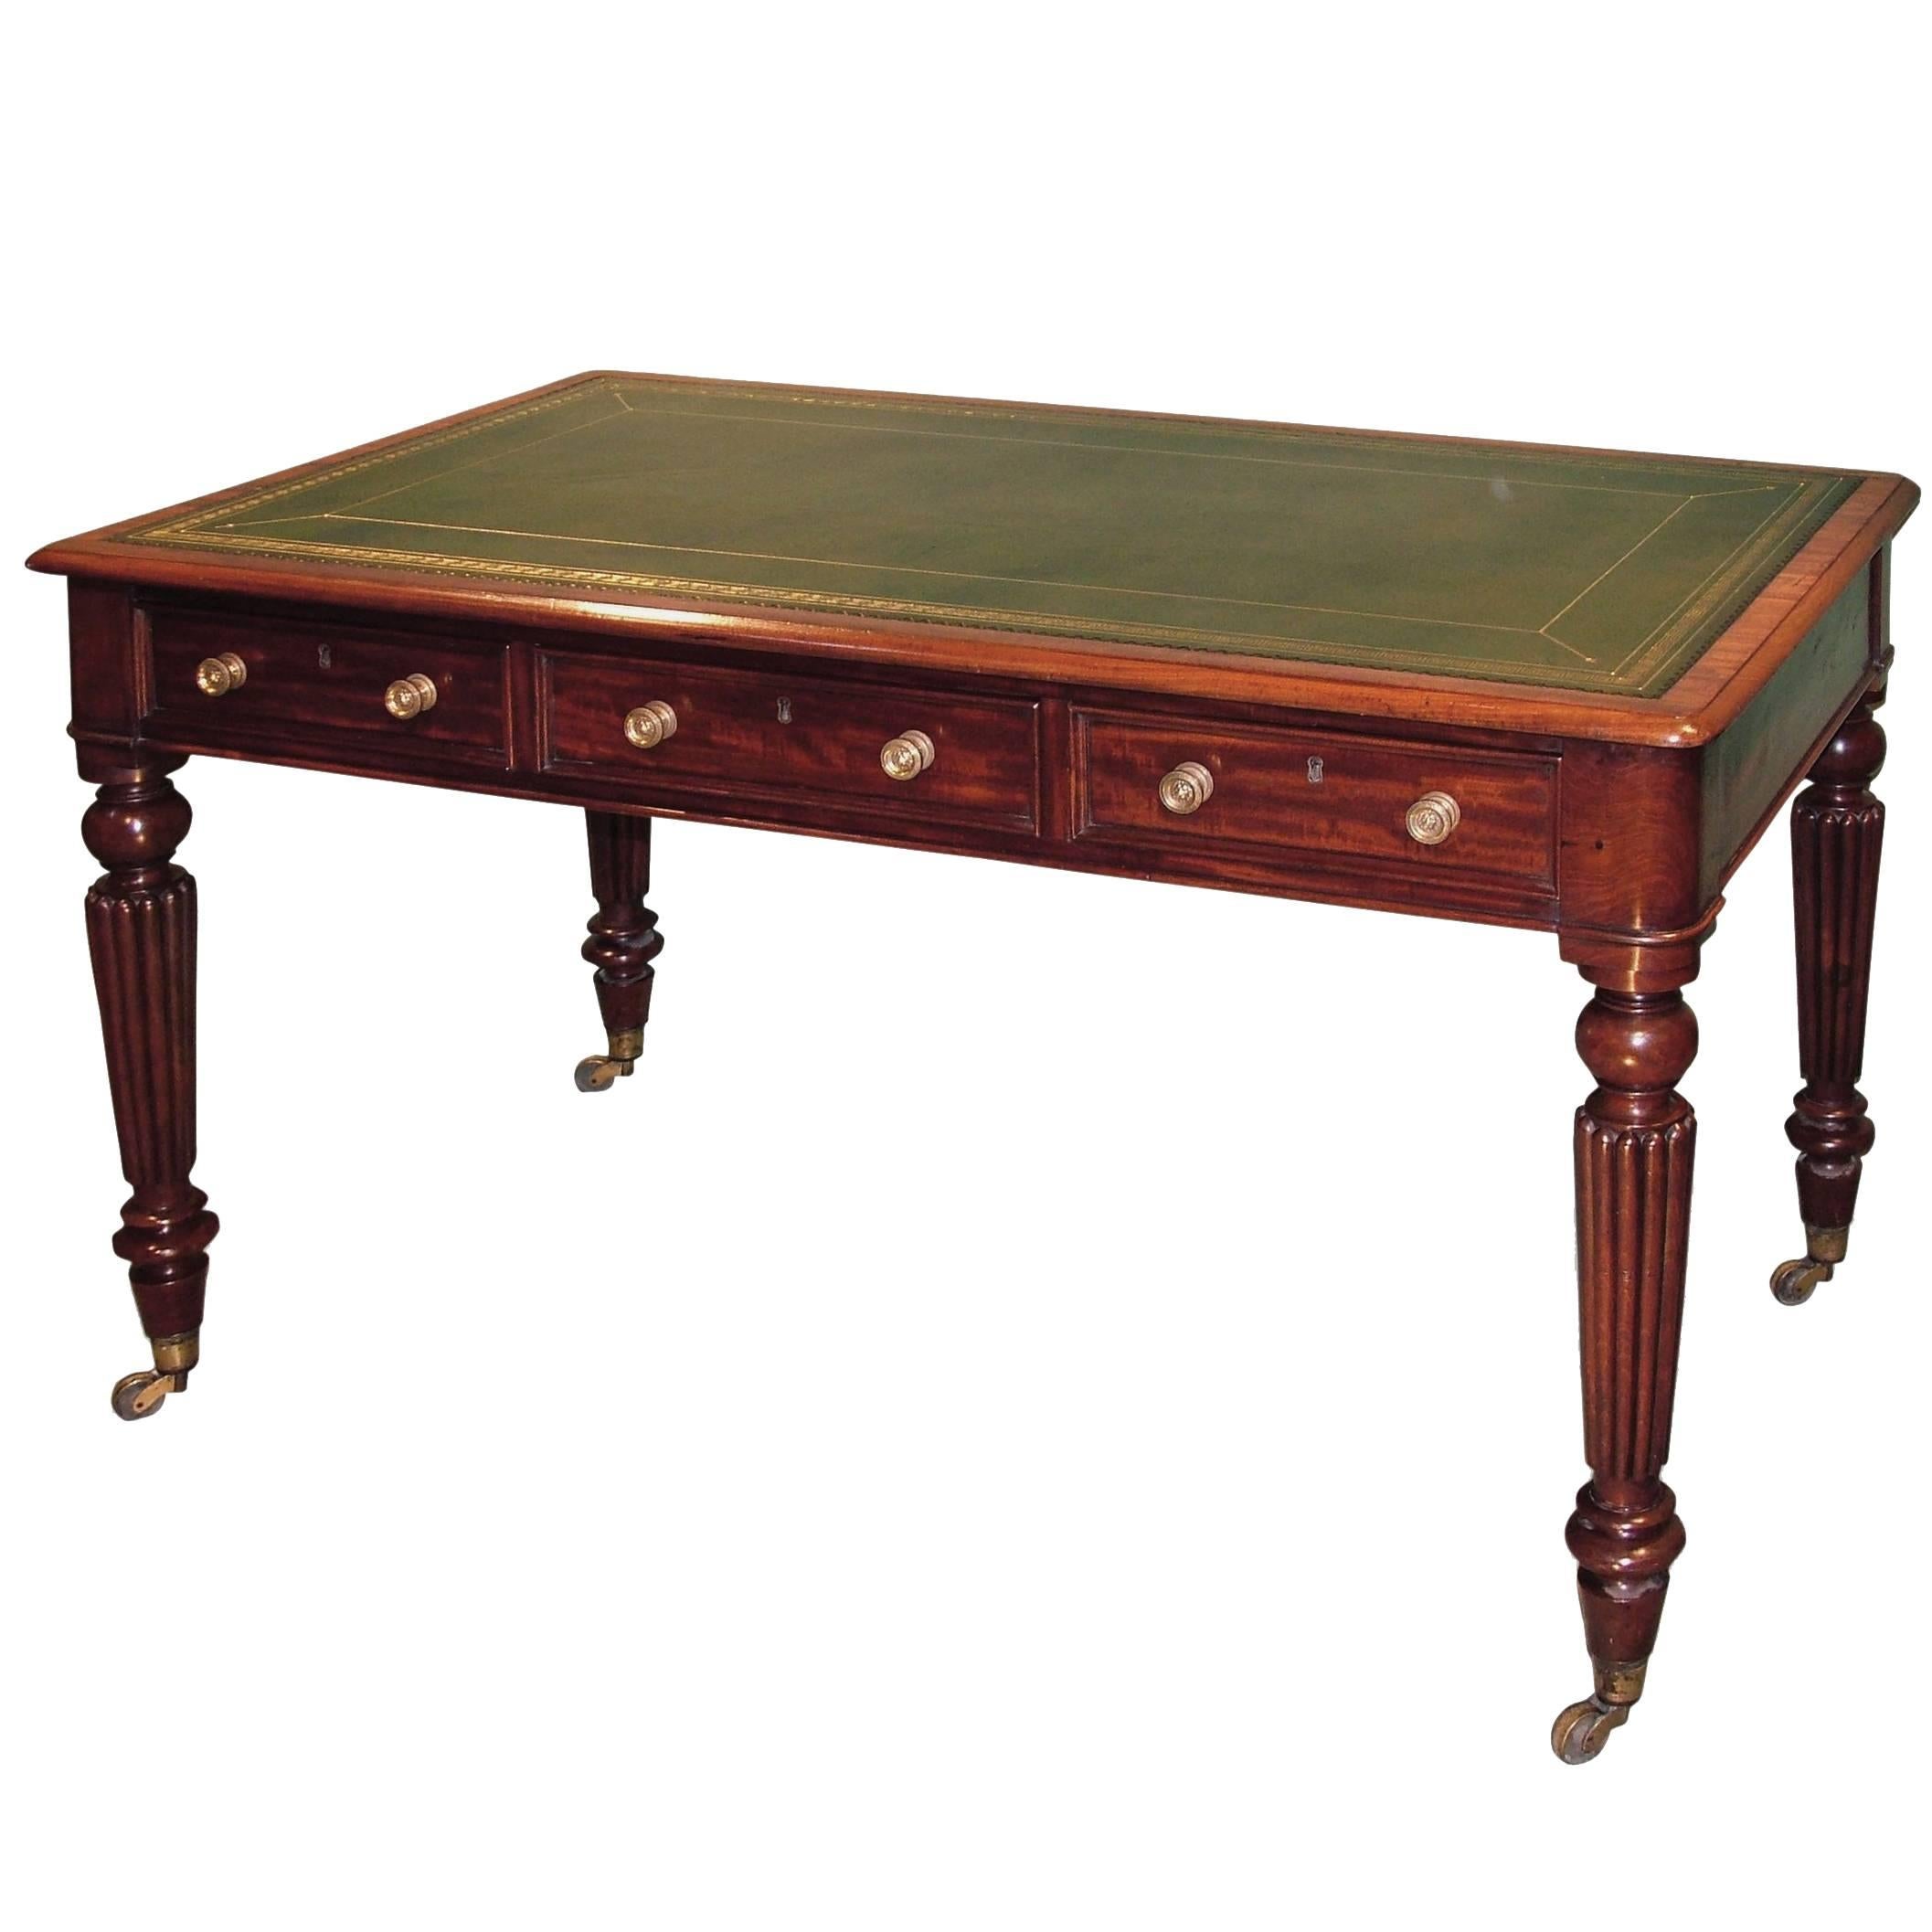 19th Century William IV period Mahogany Writing Table.